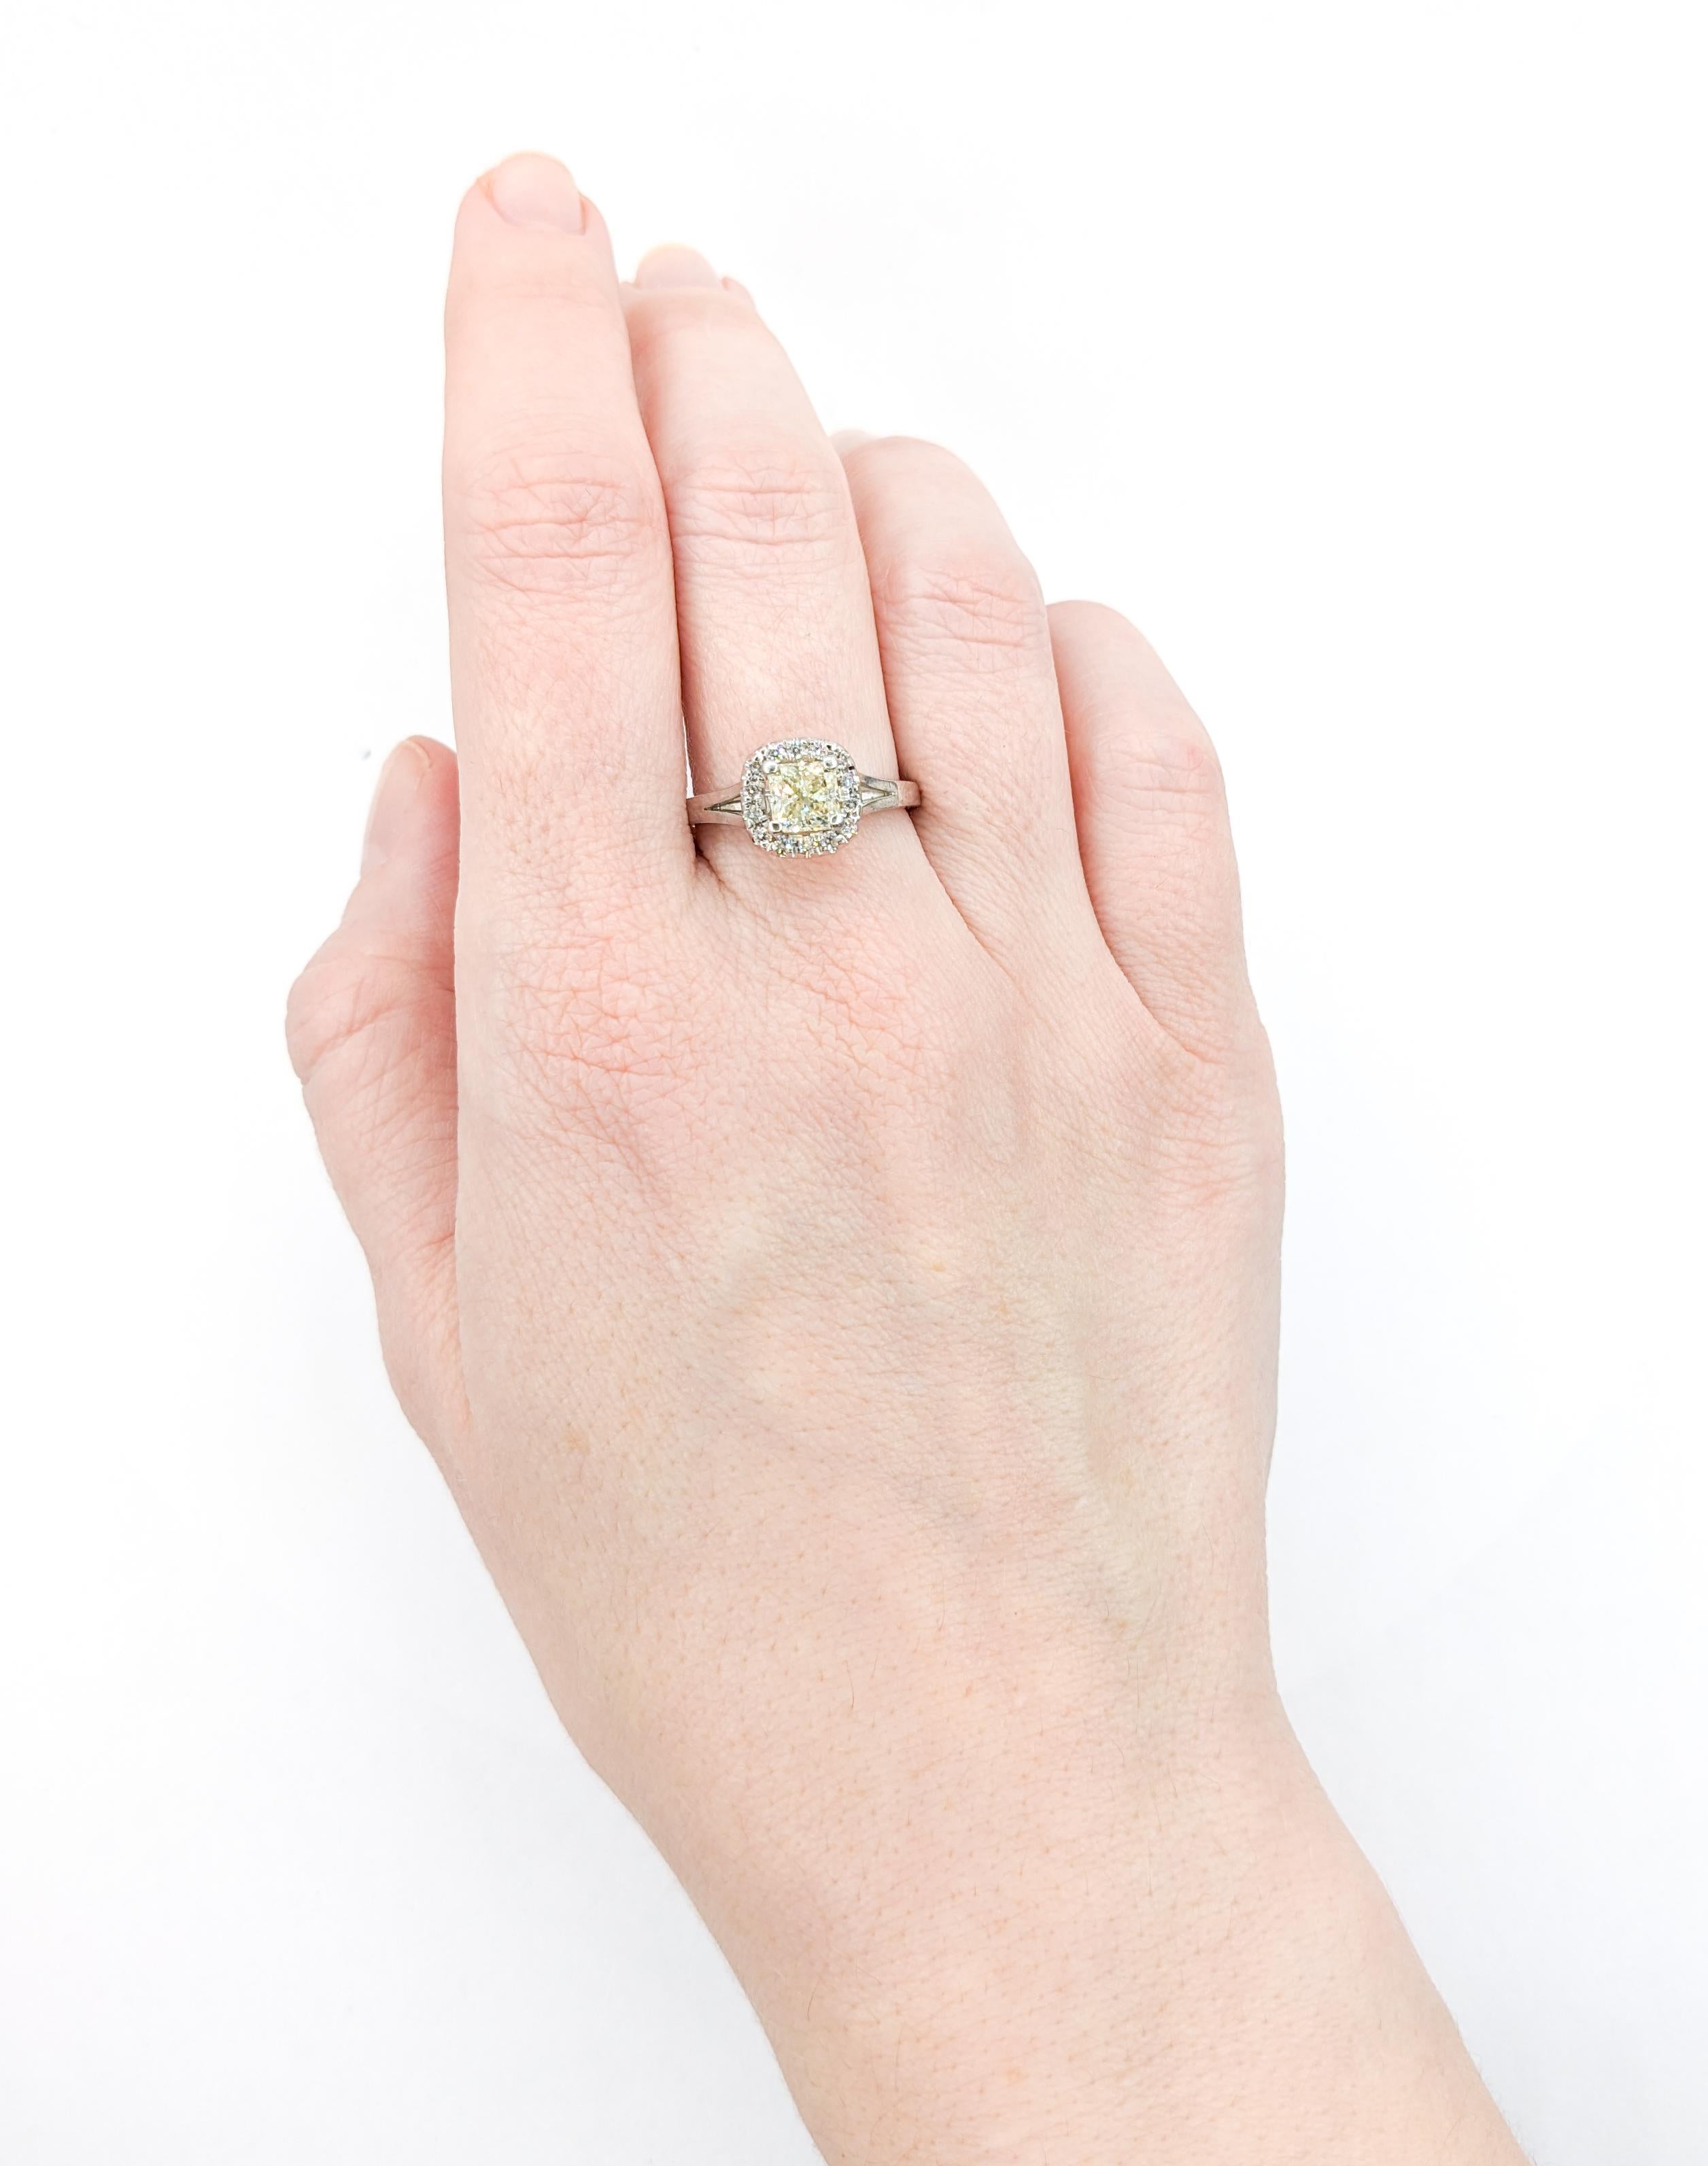 Contemporary 1ct Princess cut Diamond& Diamond Ring In White Gold For Sale